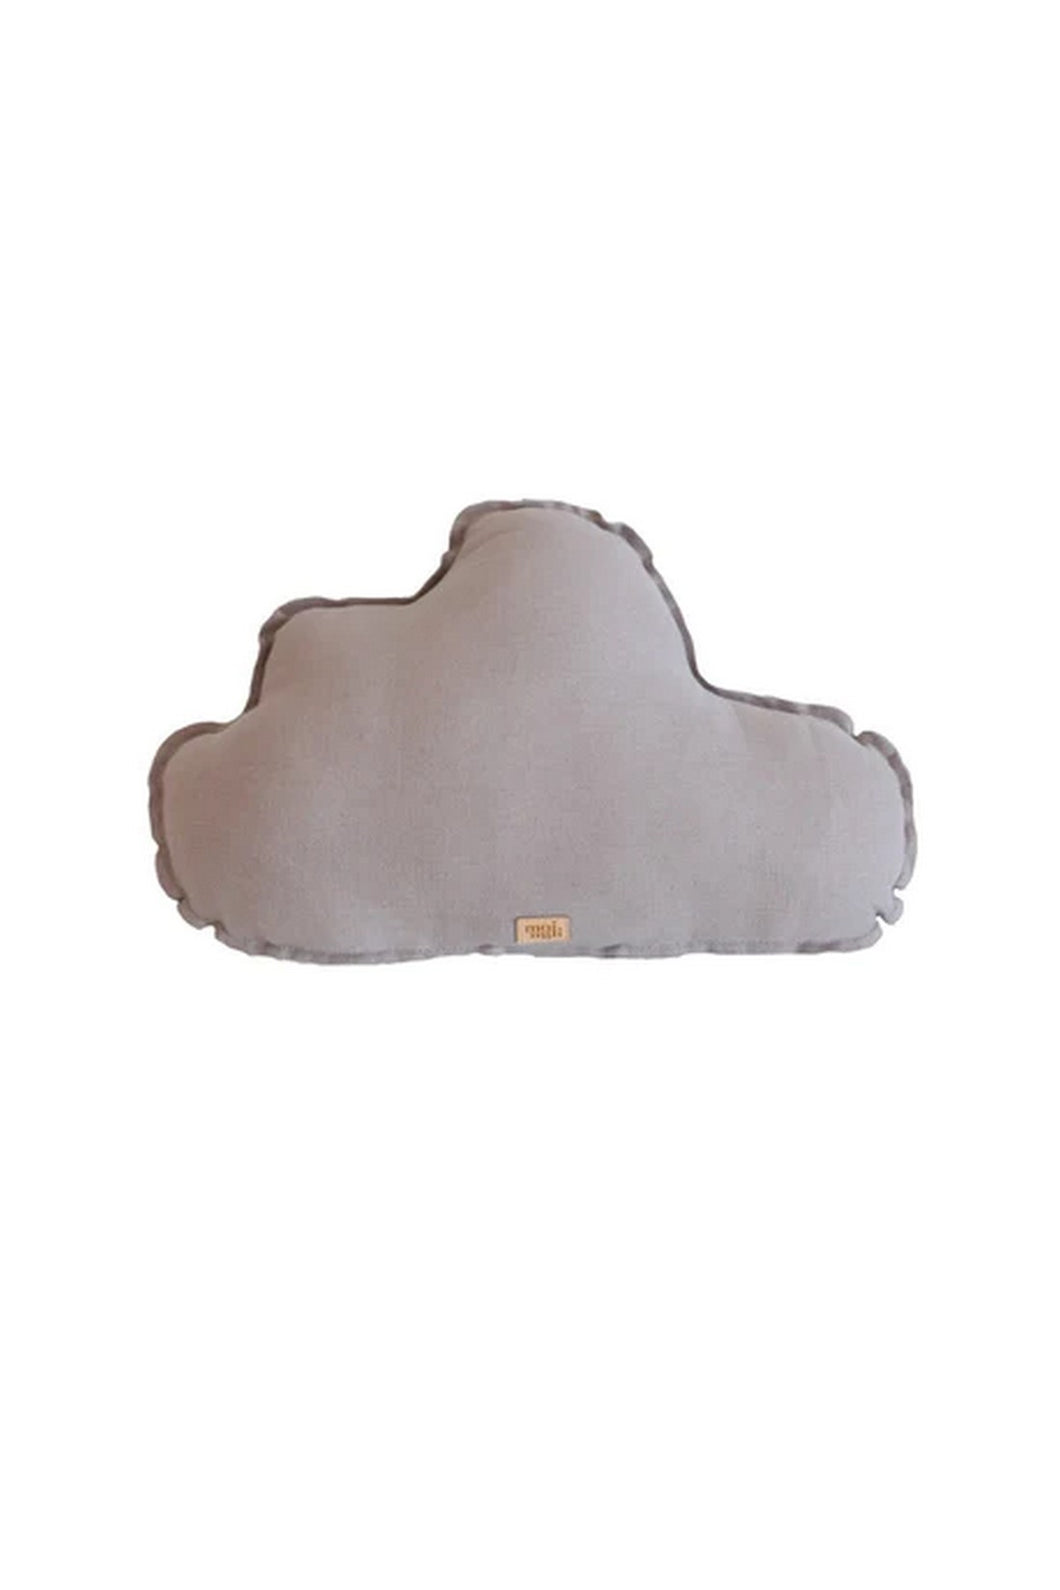 Moi Mili Grey Linen Cloud Pillow 4